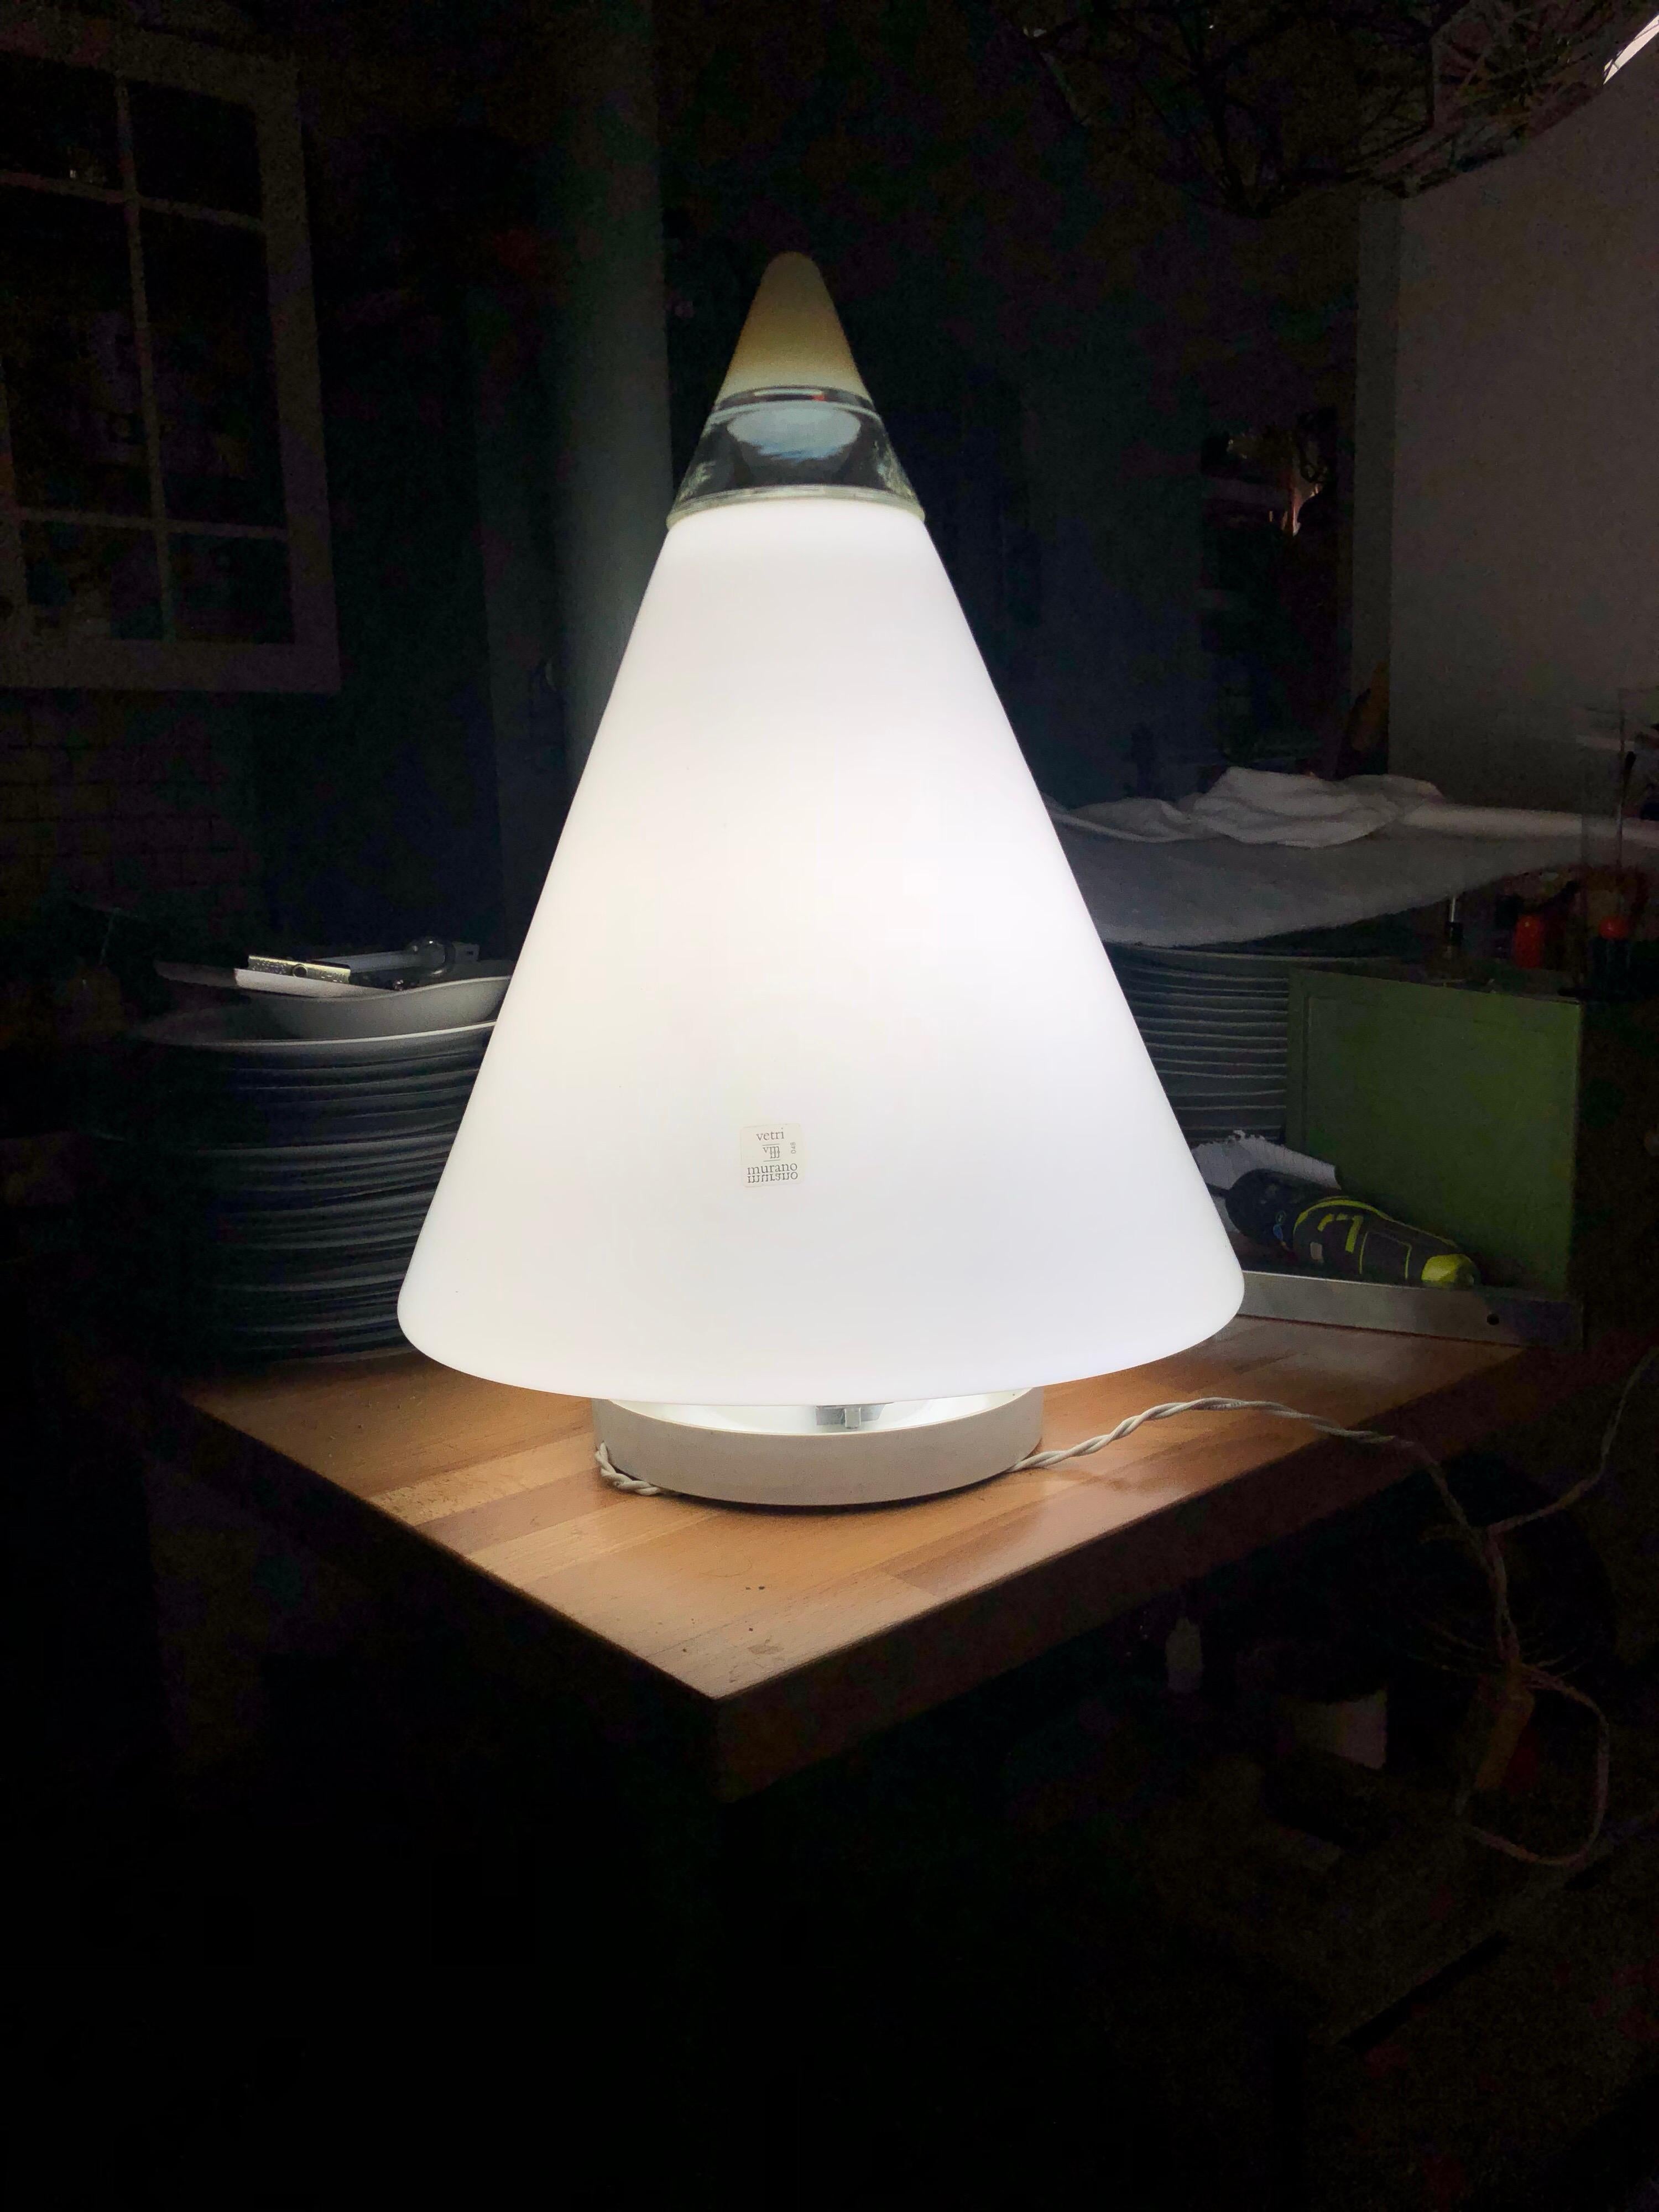 glass base lamp